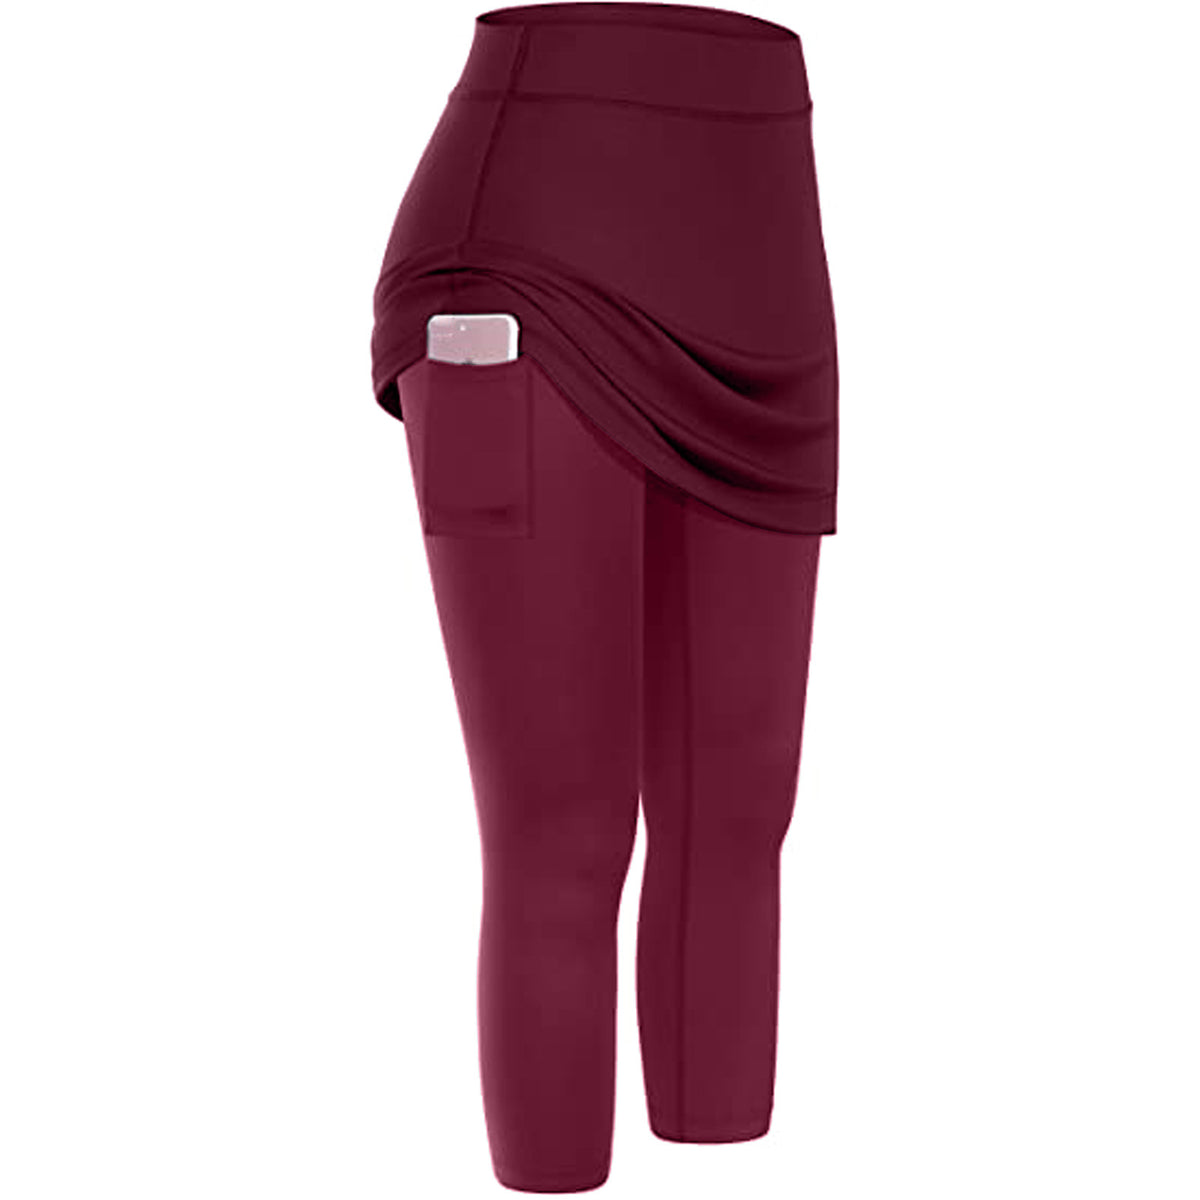 Color: Wine Red, Size: 2XL - Women Tennis Skirted Leggings Pockets Elastic Sports Yoga Capris Skirts Legging